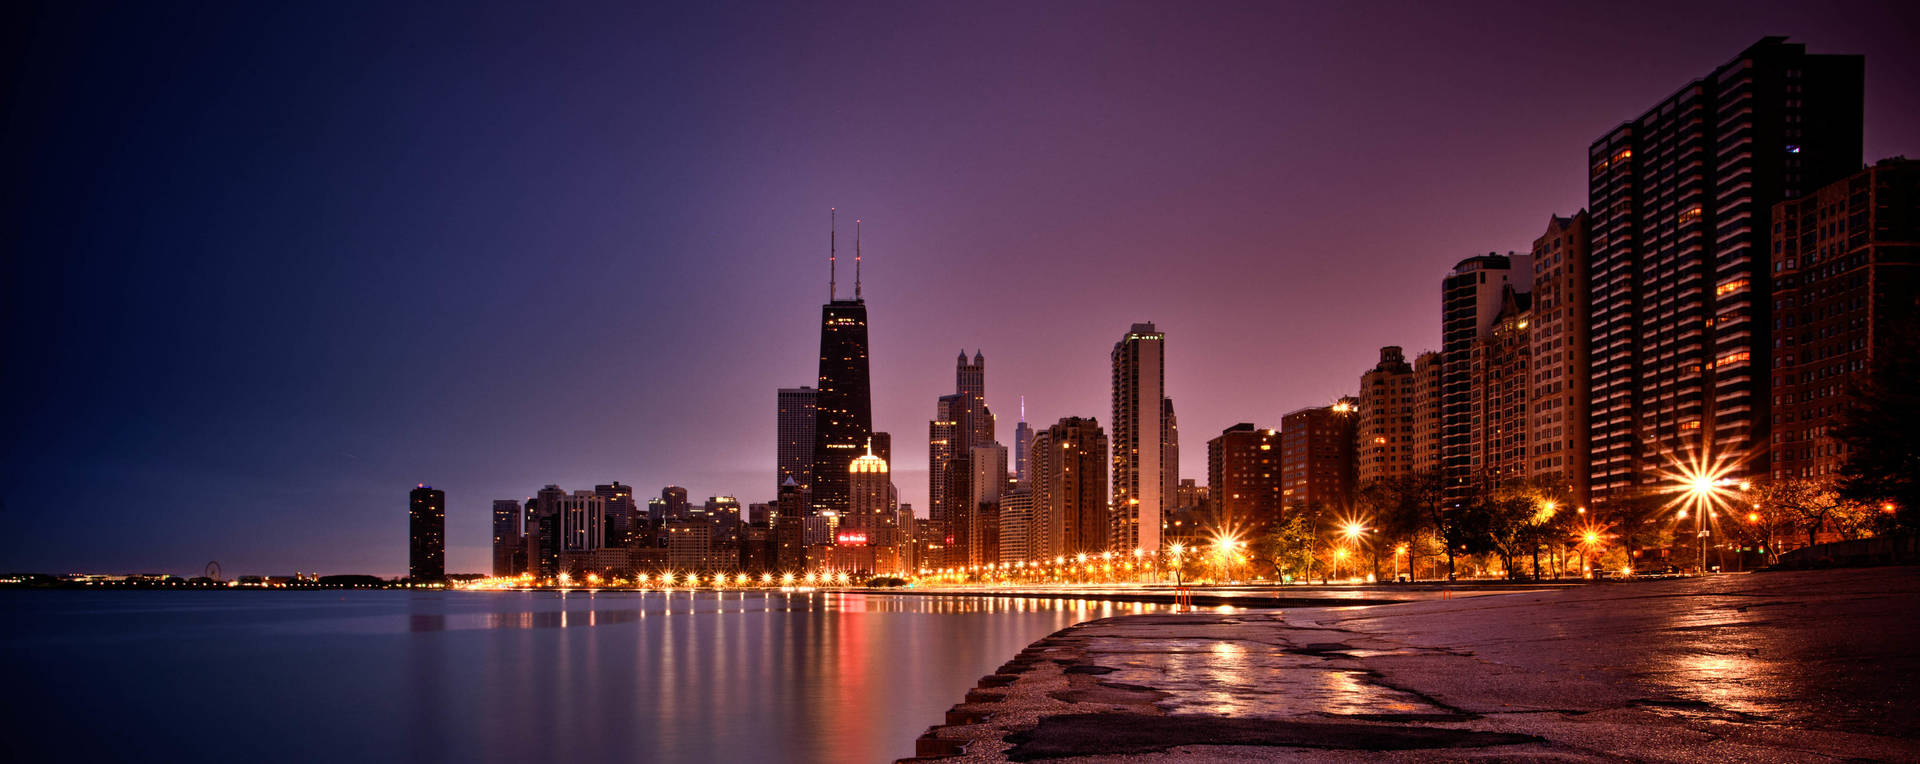 Chicago Park District City View